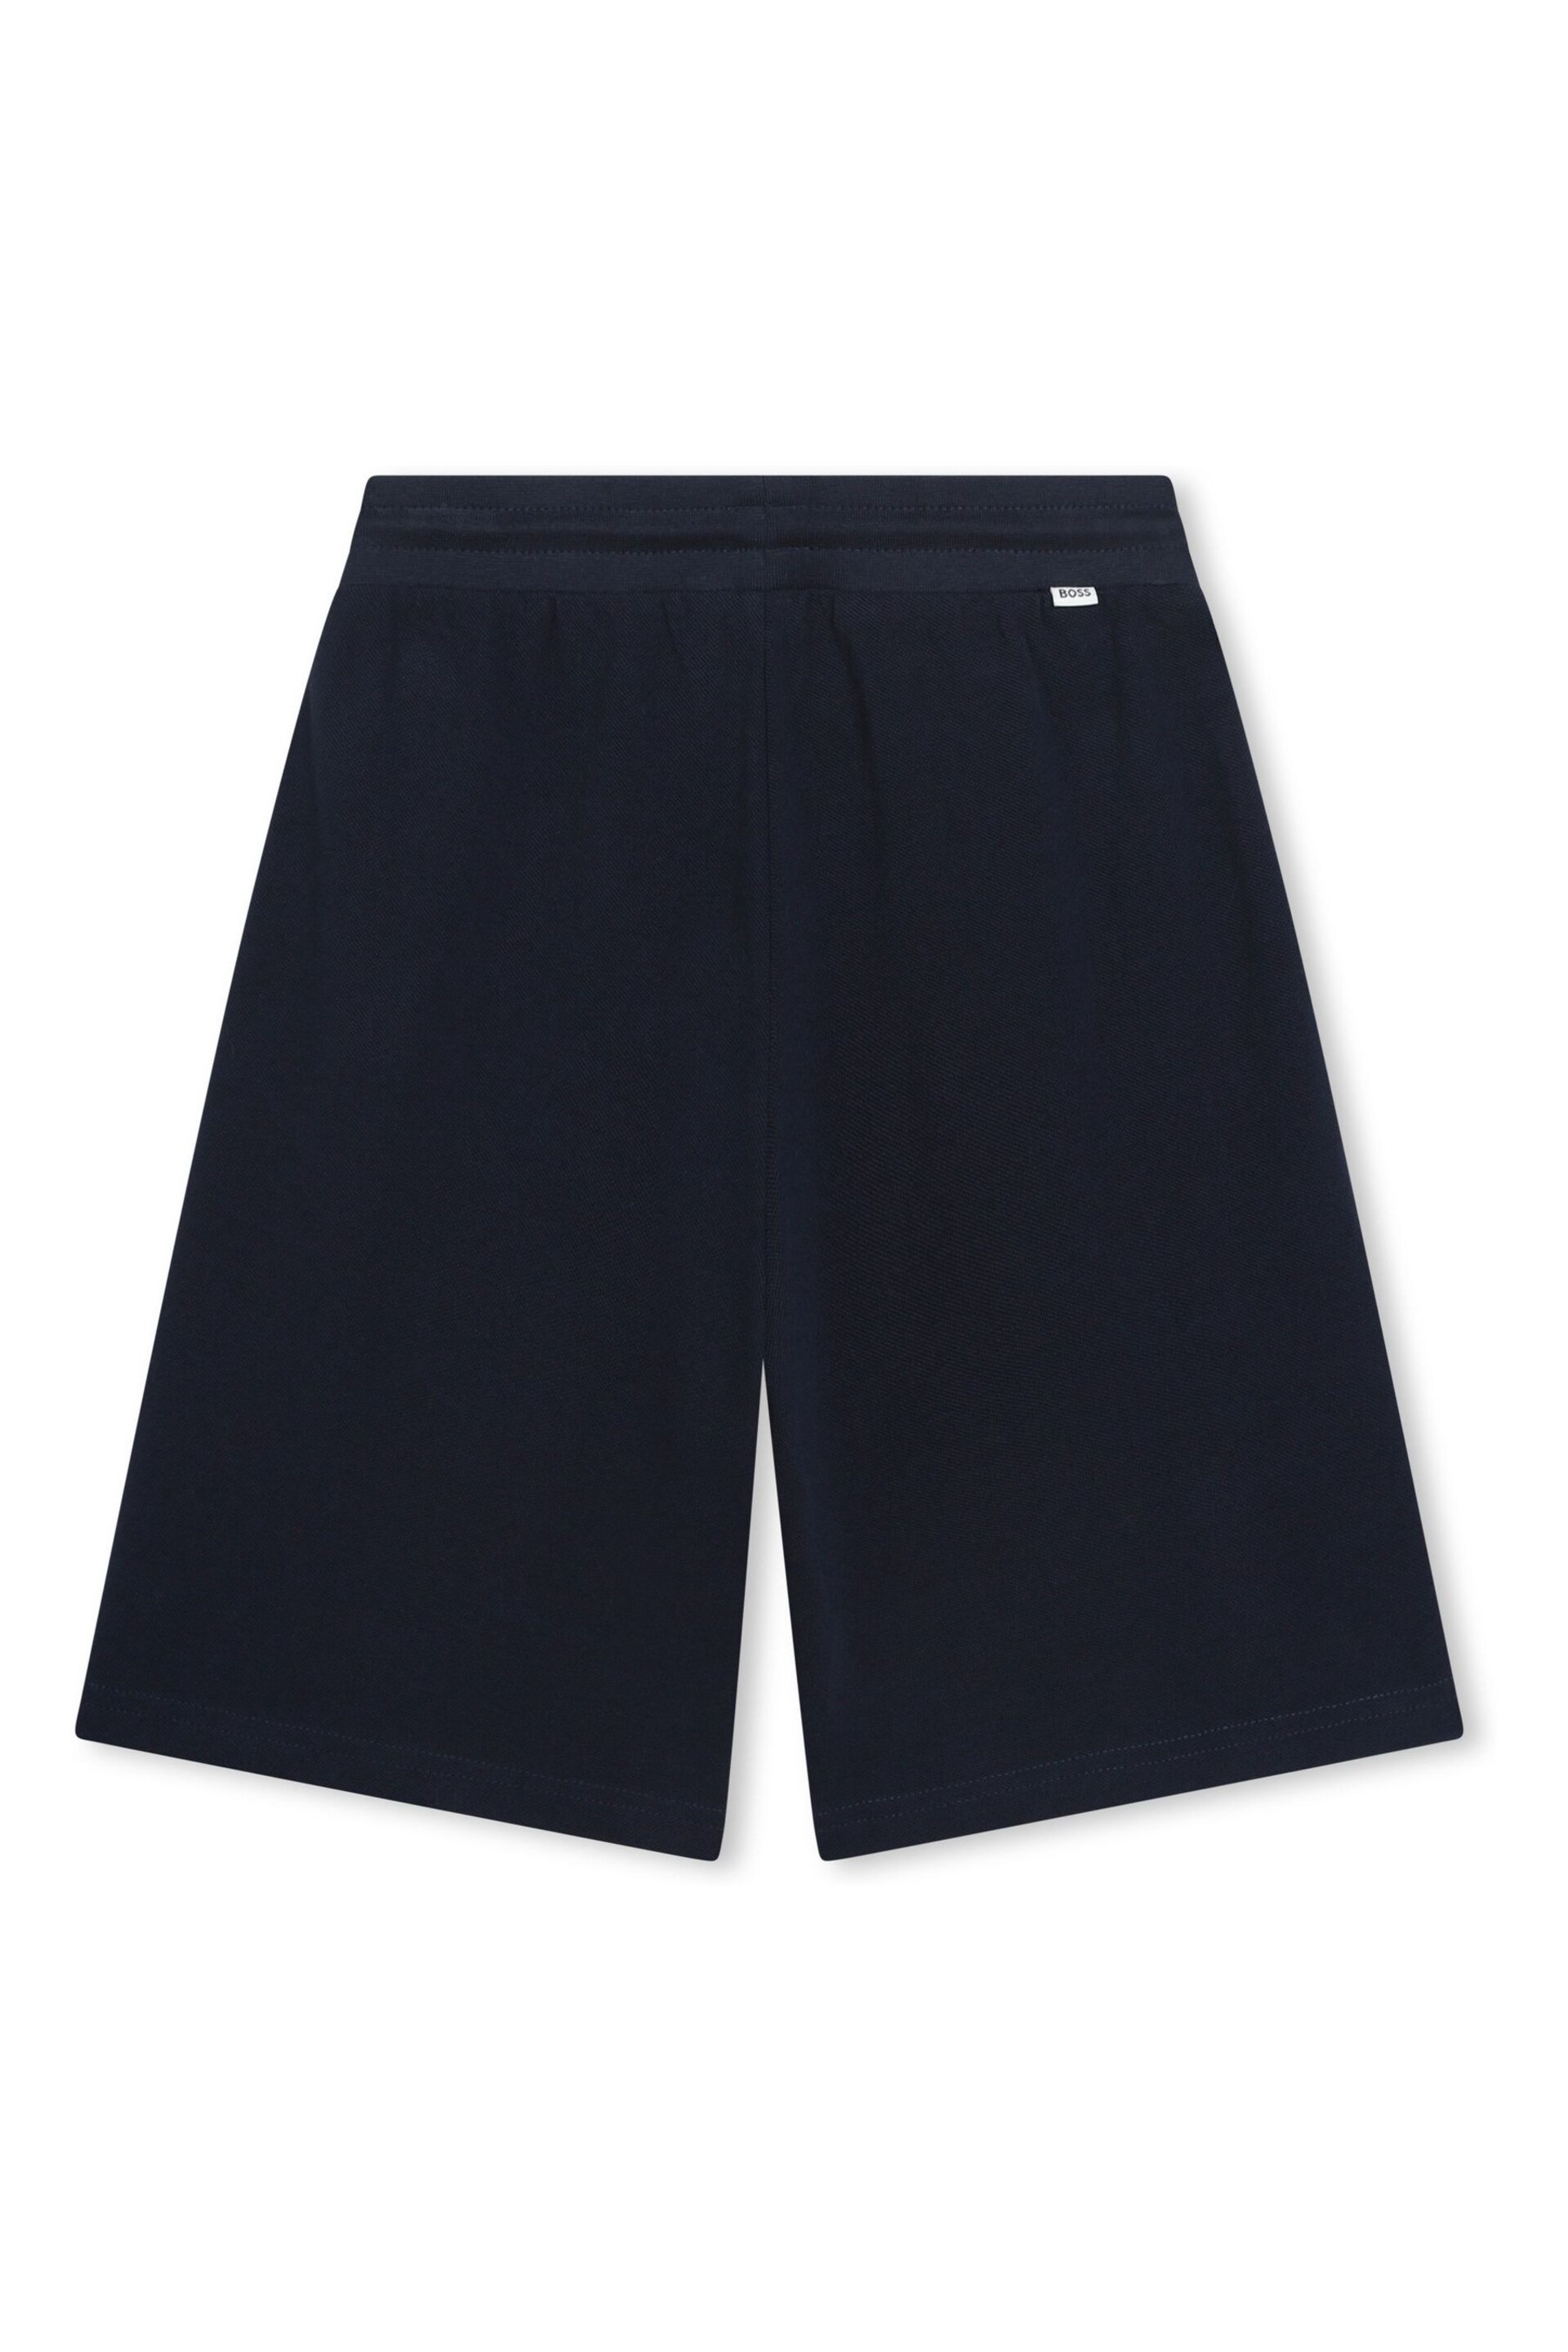 BOSS Blue Colourblock Polo And Shorts Set - Image 4 of 7